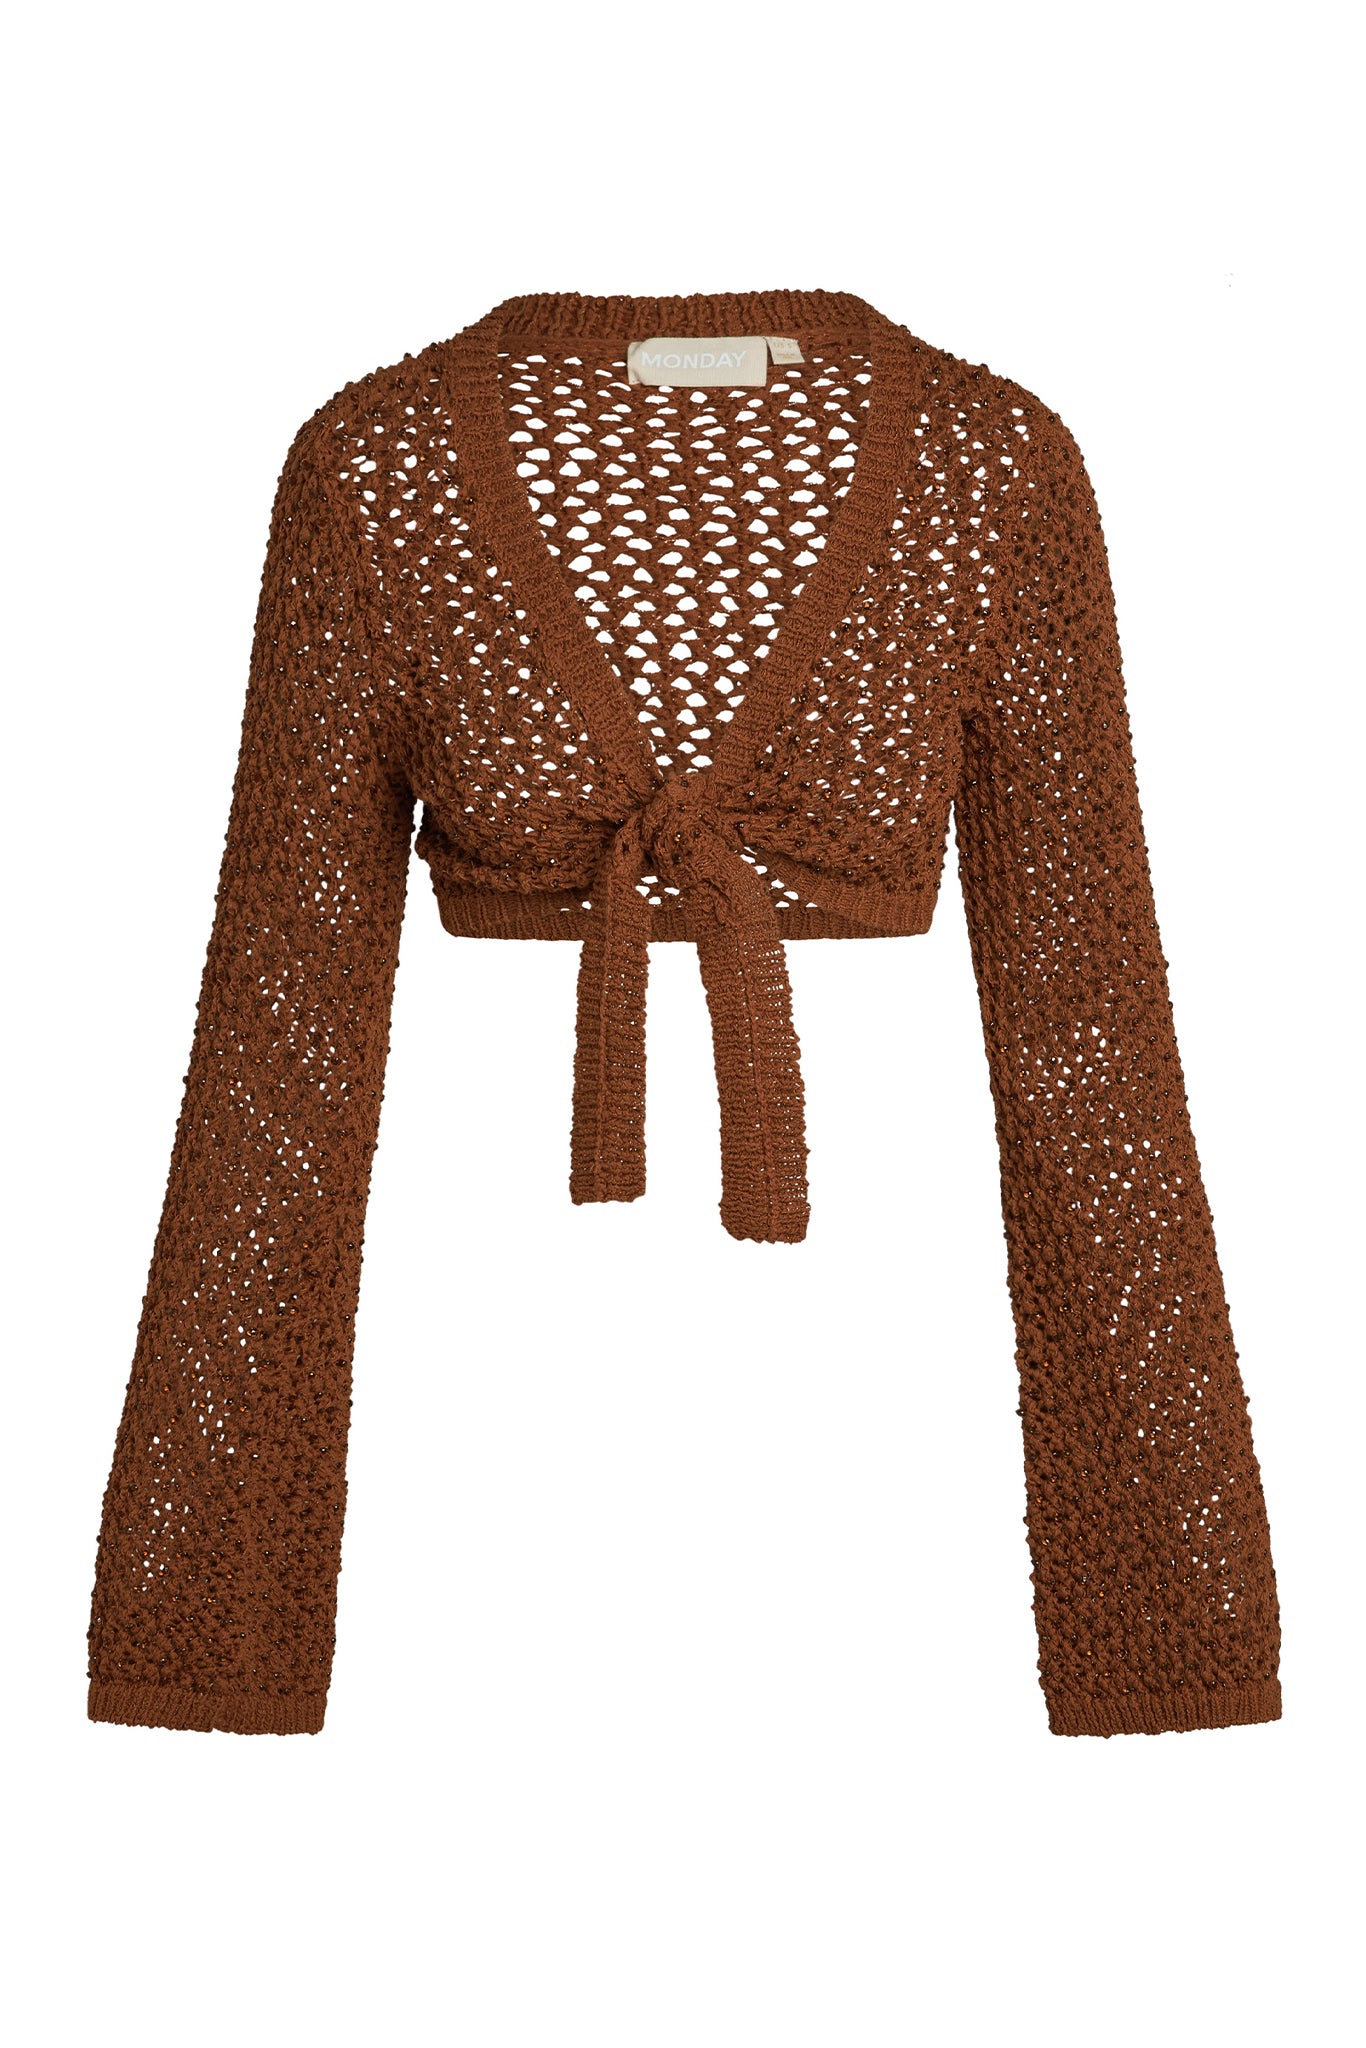 Wailea Top - Bronze Diamond Crochet